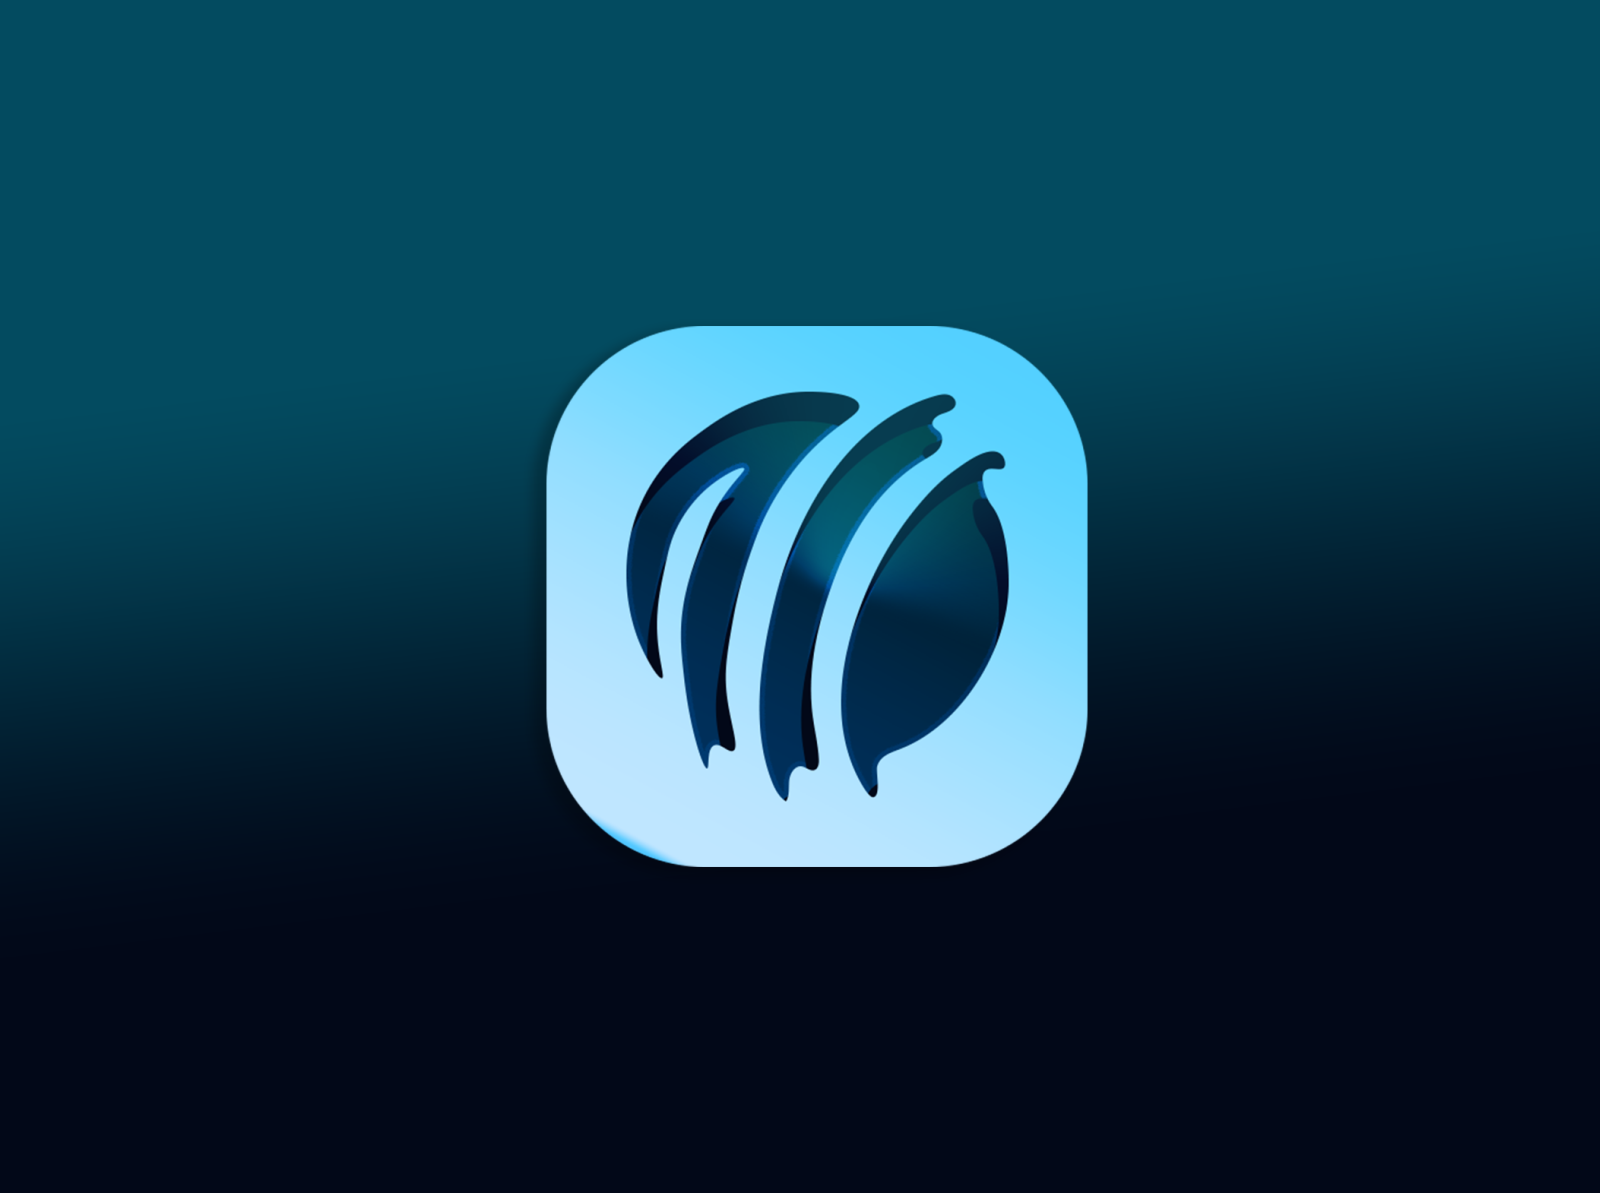 ICC world cup app icon recreate 3d app icon app icon design ball cricket design illustration minimal world cup